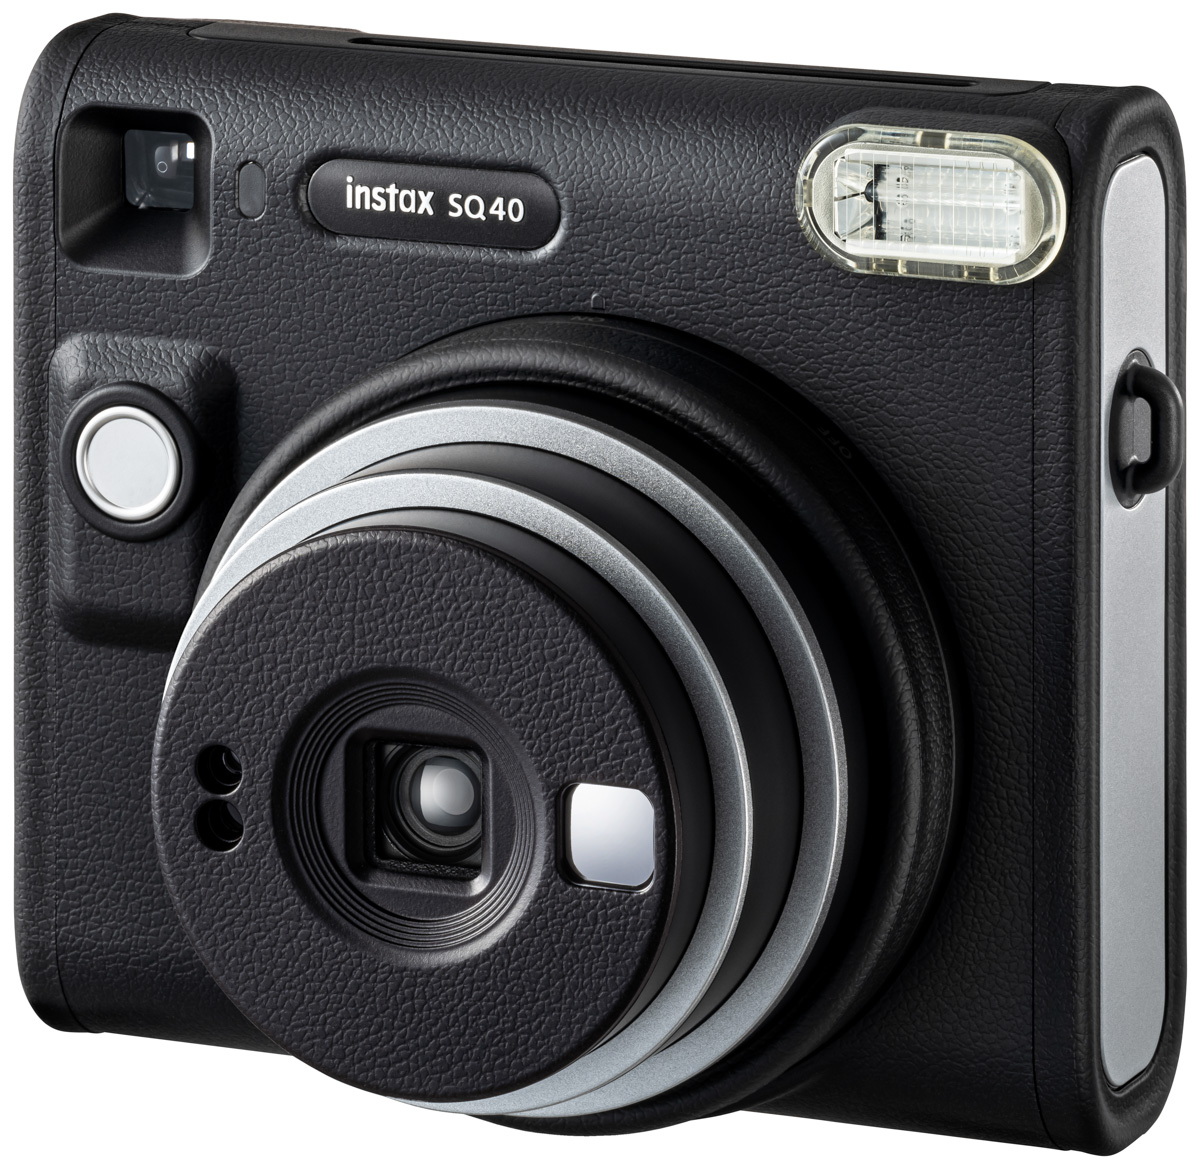 Fujifilm working on square format Instax camera and film: Digital